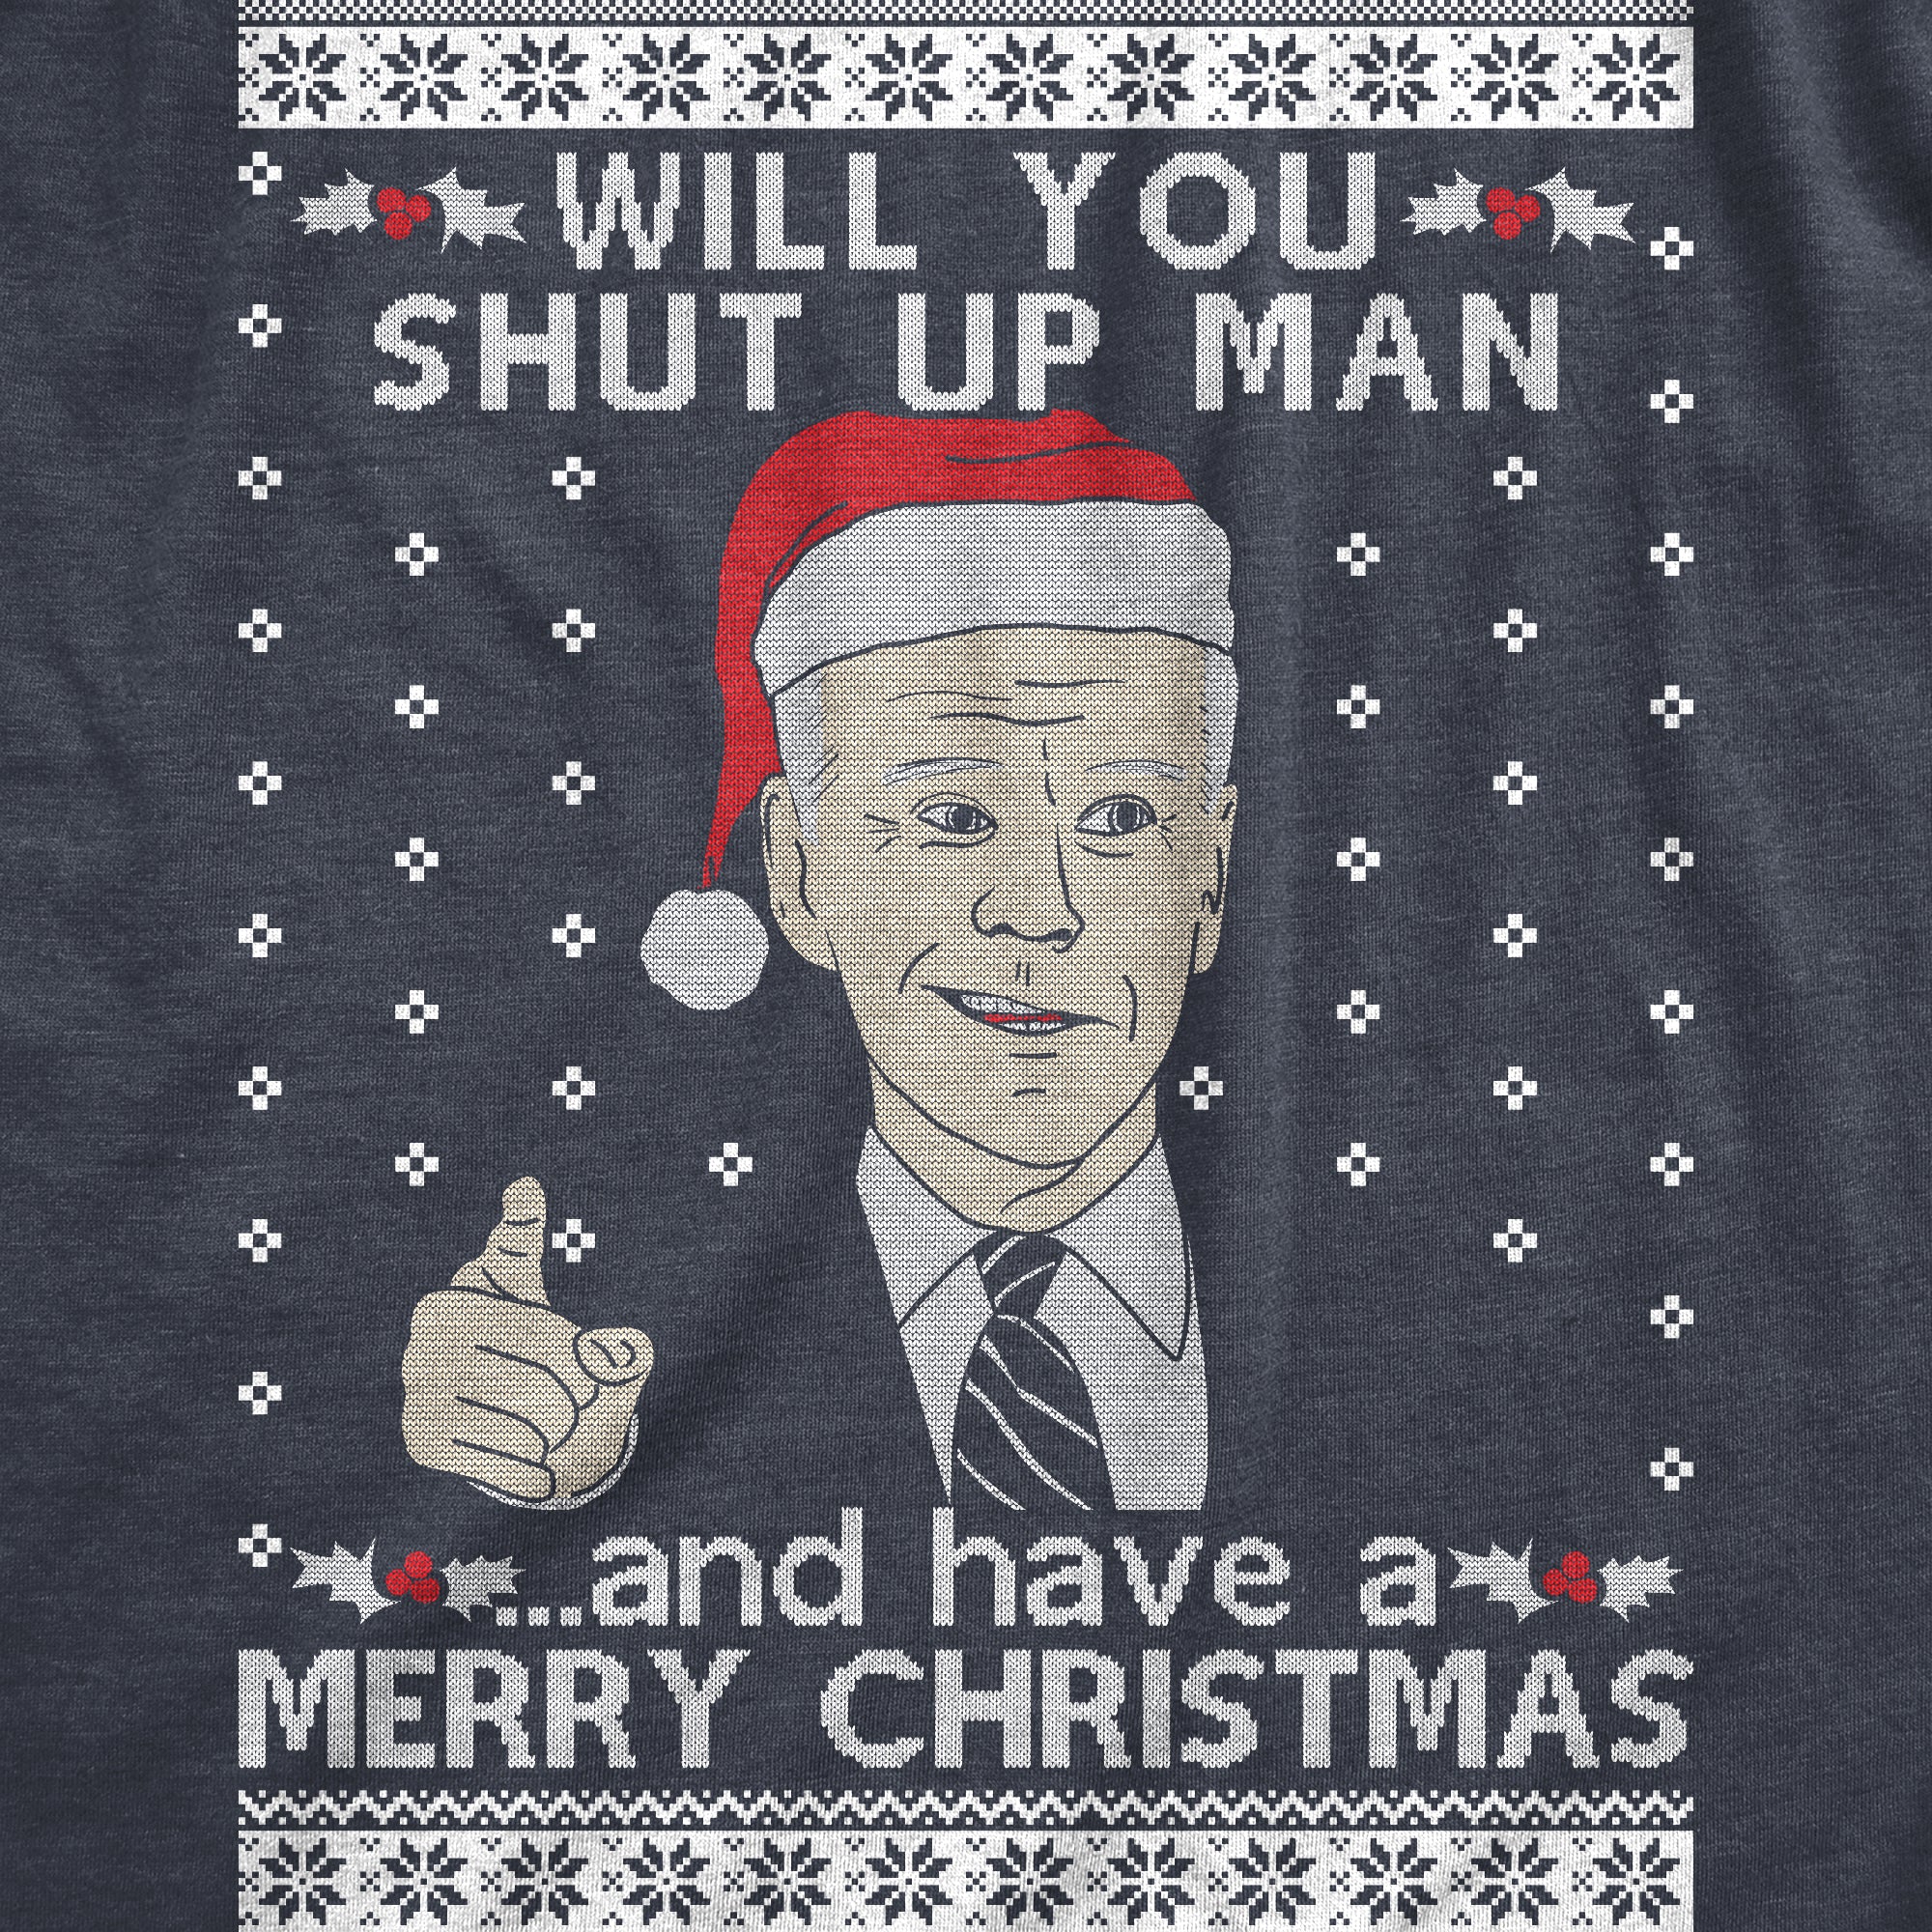 Funny Heather Navy Joe Biden Ugly Christmas Sweater Mens T Shirt Nerdy Christmas Political Ugly Sweater Tee